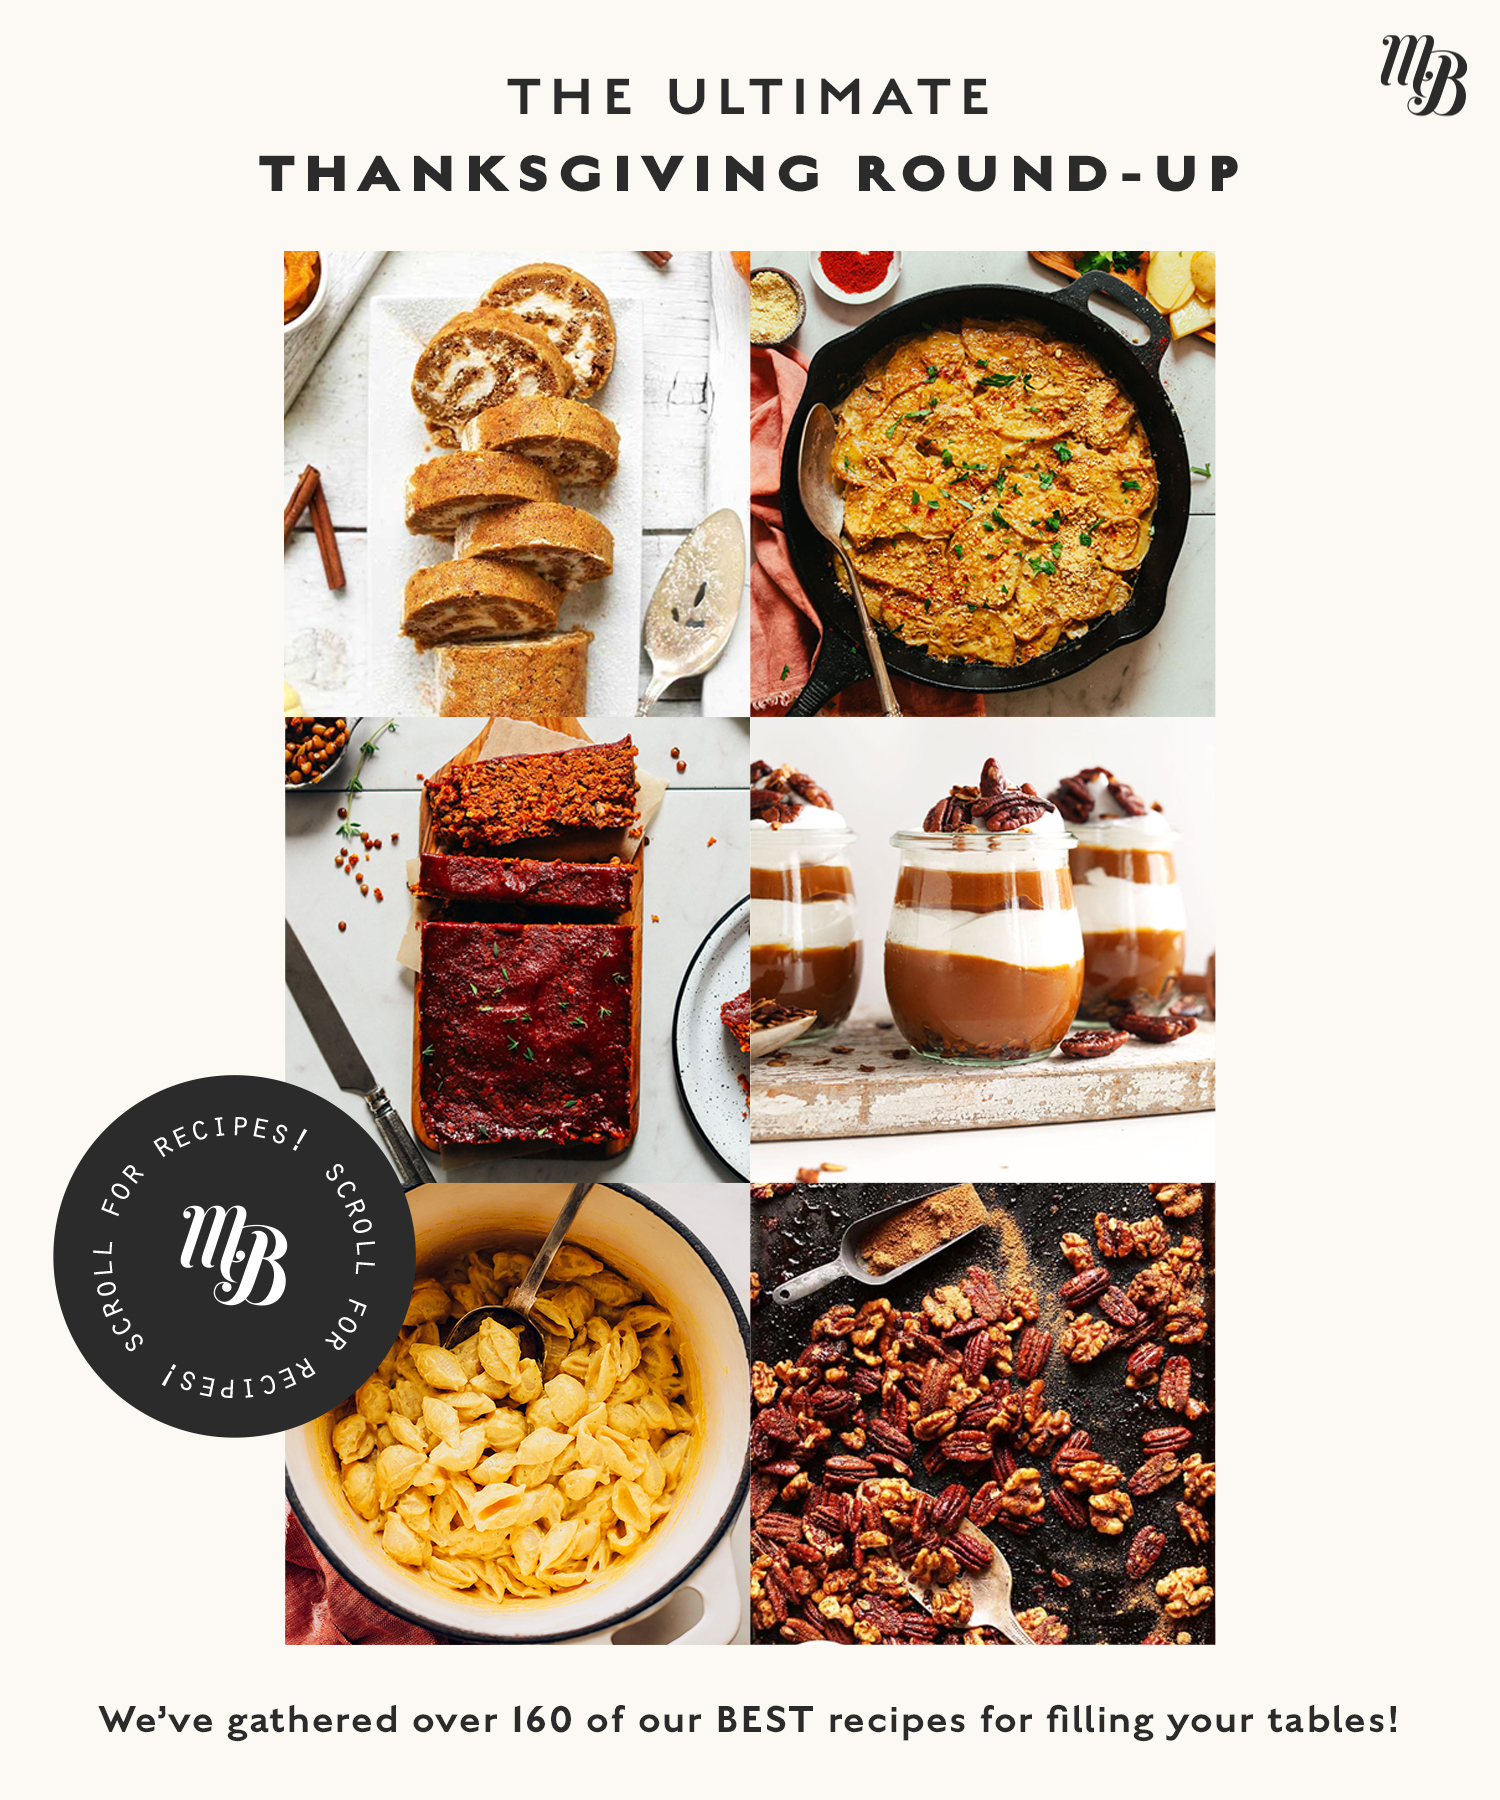 Assortment of Thanksgiving recipes